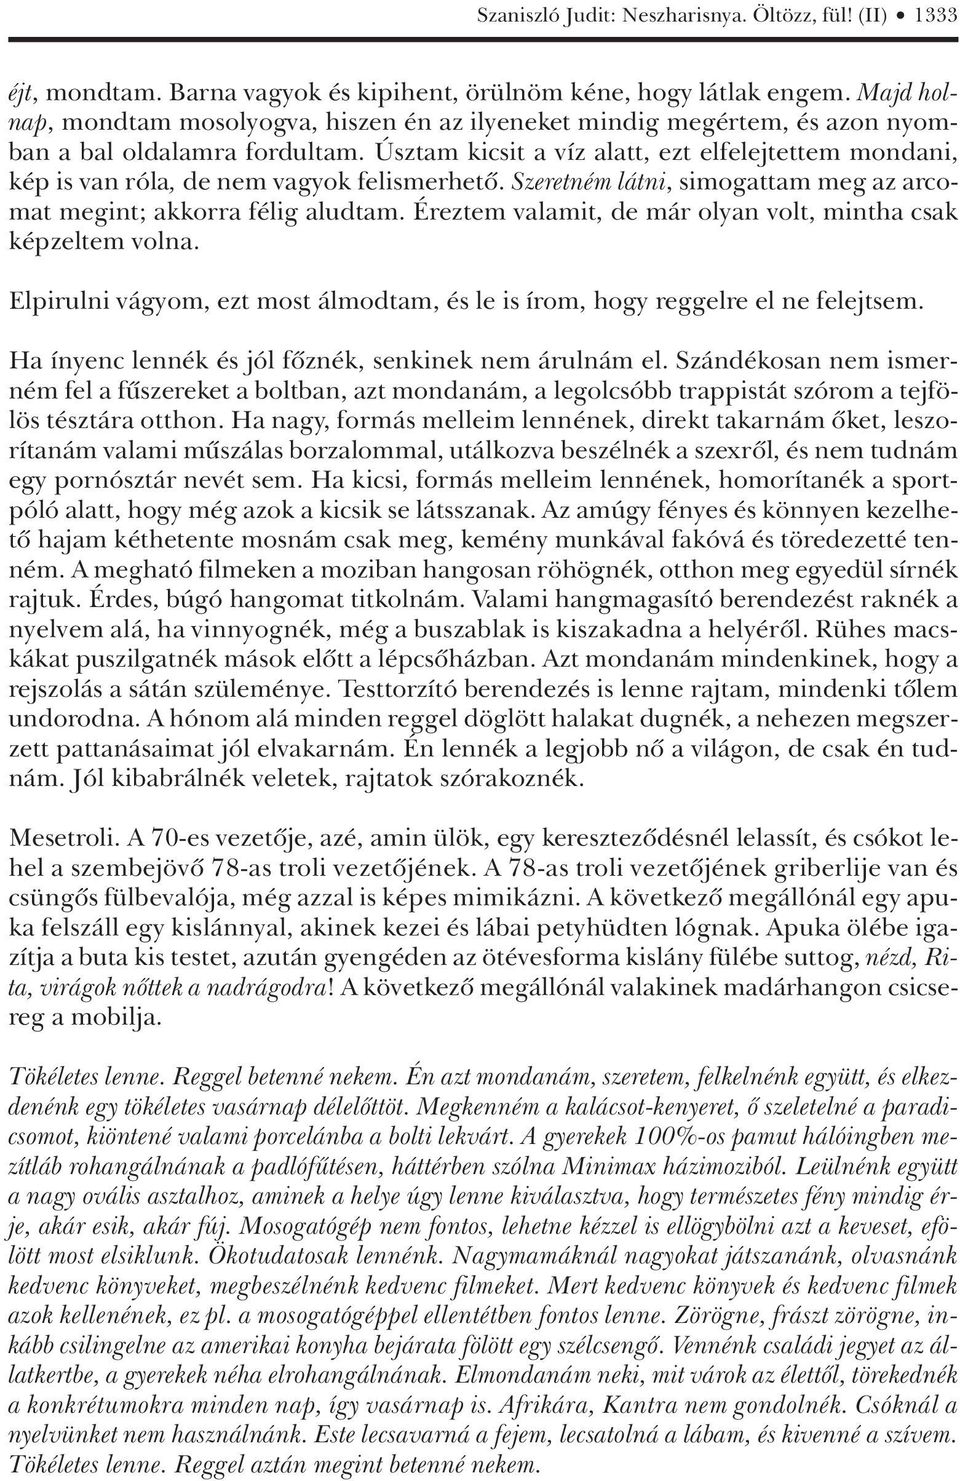 NESZHARISNYA. ÖLTÖZZ, FÜL! (II) - PDF Free Download